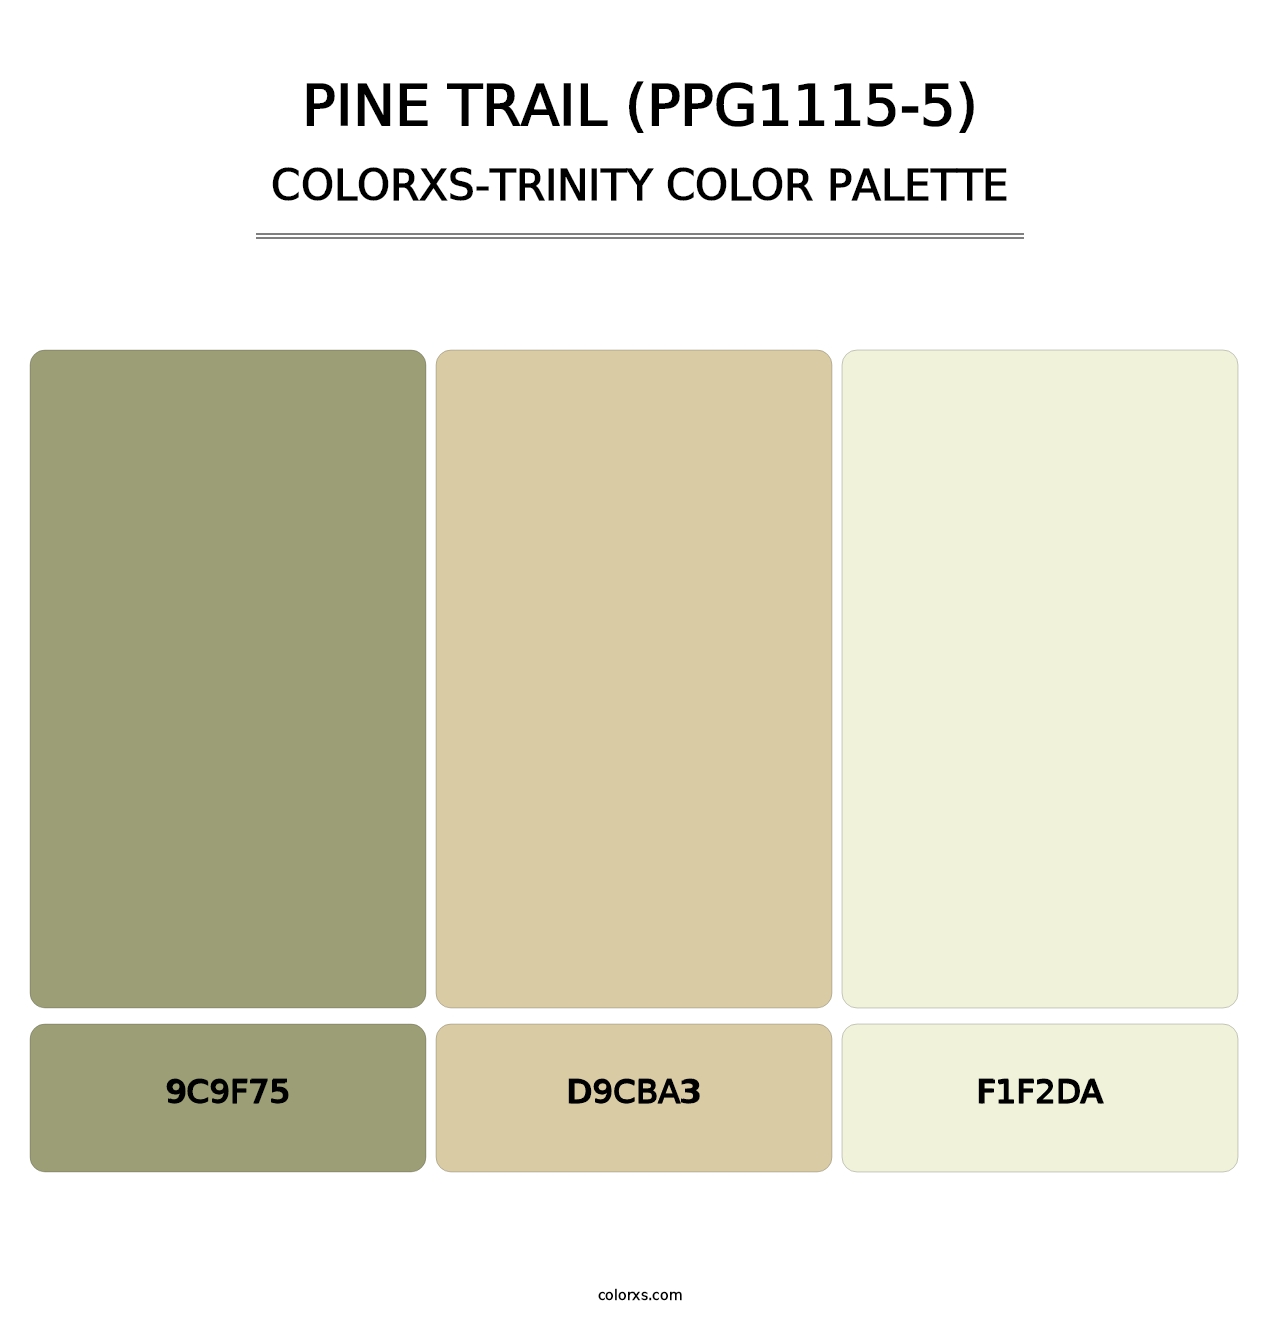 Pine Trail (PPG1115-5) - Colorxs Trinity Palette